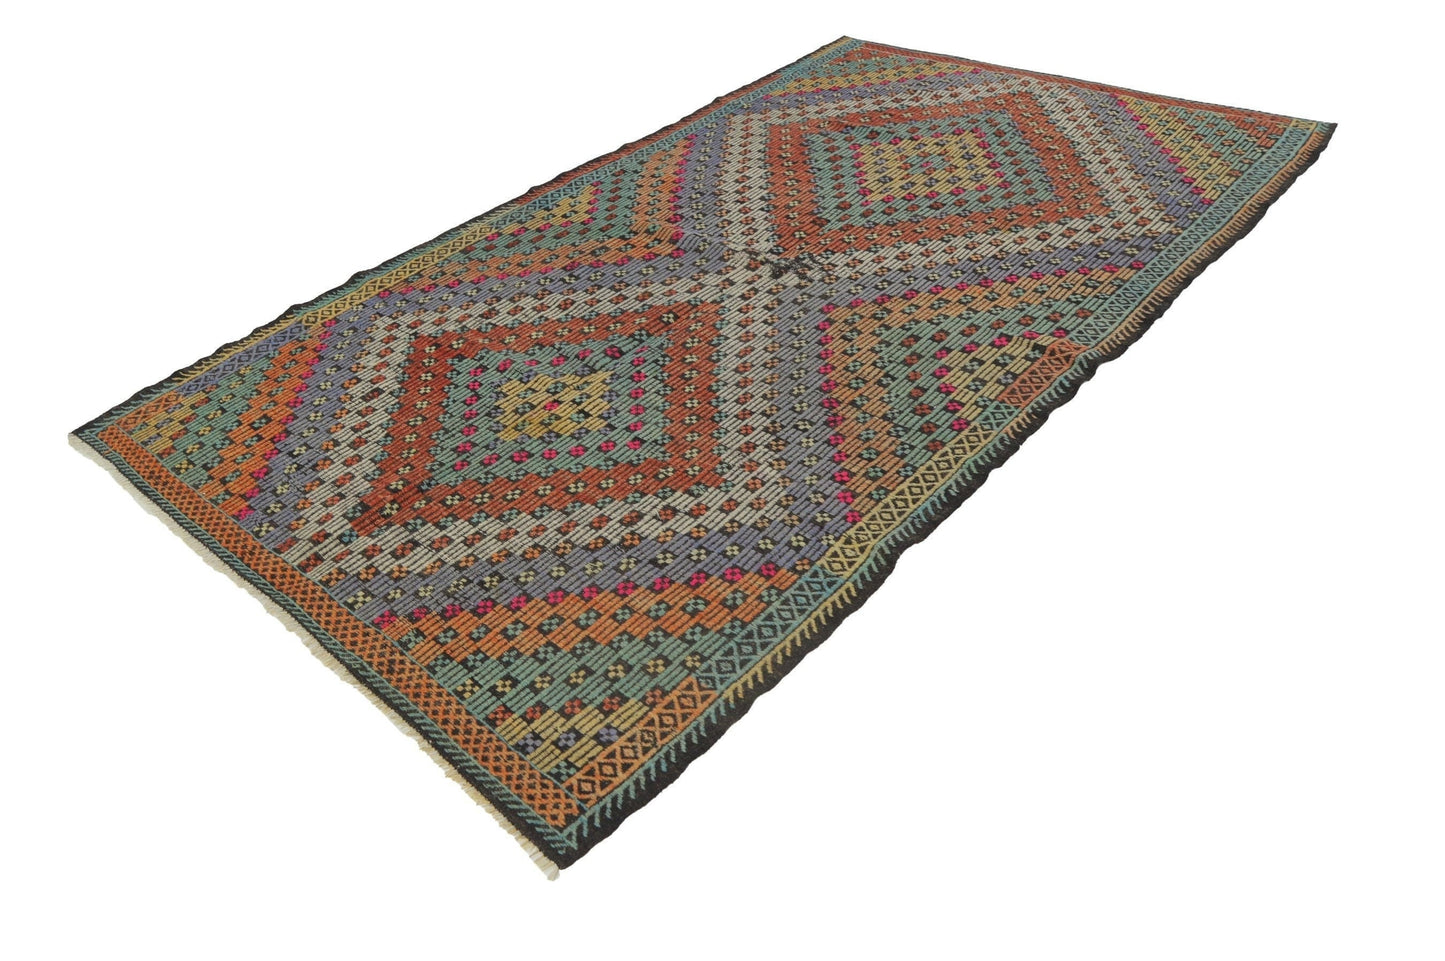 Turkish Kilim rug, Vintage Kilim, Handmade rug, Traditional rug, Office rug, Bedroom rug, Bohemian, Area rug, 6x9 Kilim rug